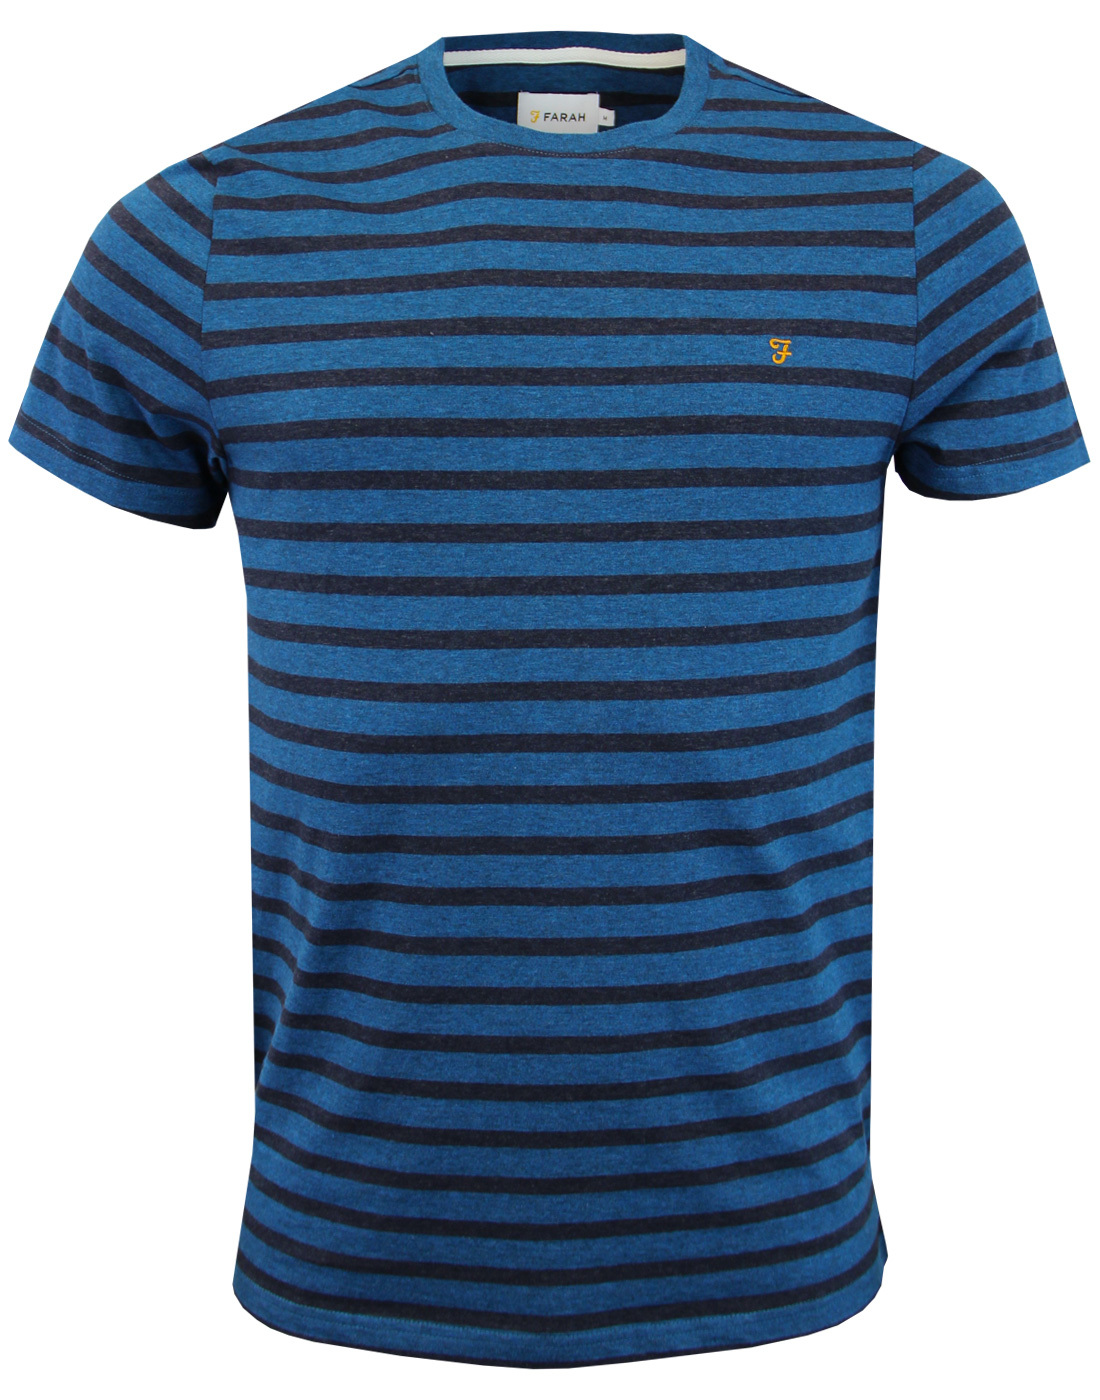 Lennox FARAH Retro 60s Mod Stripe Marl T-Shirt (A)